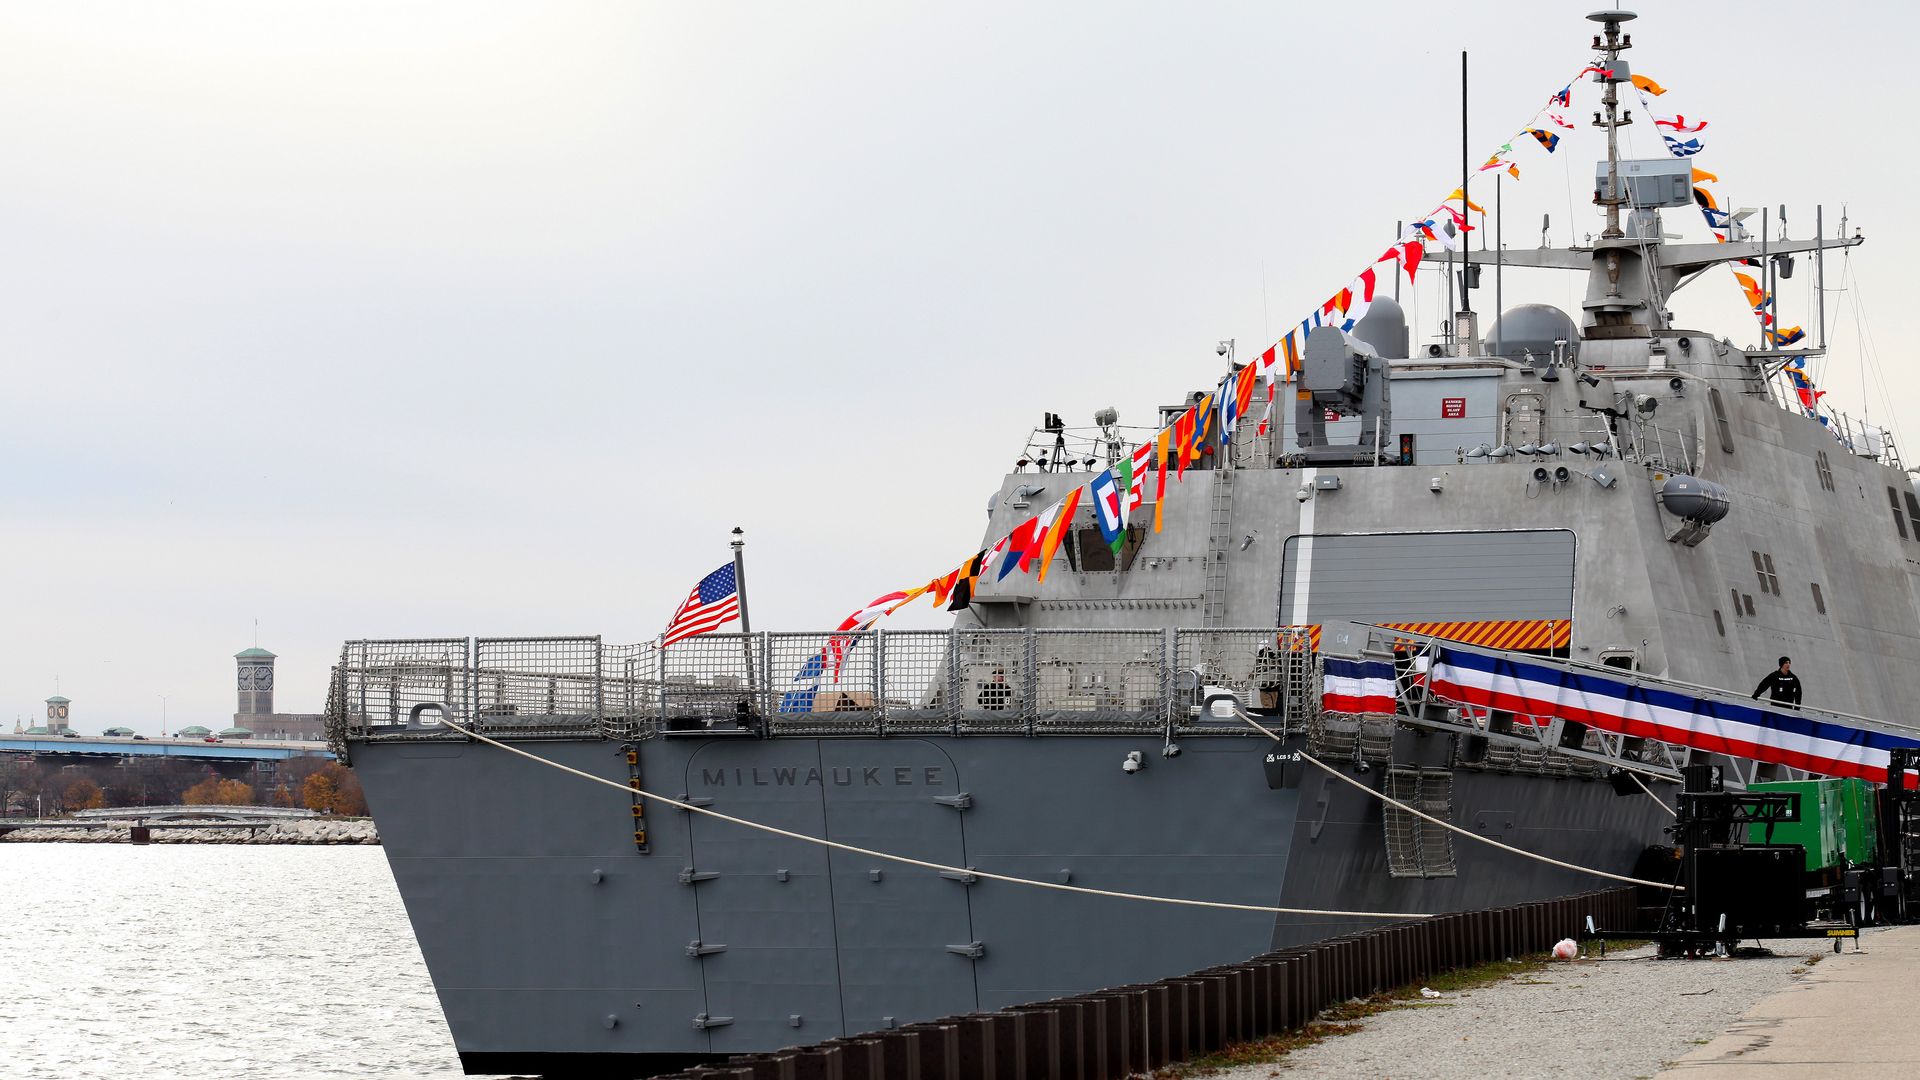 USS Milwaukee in port.